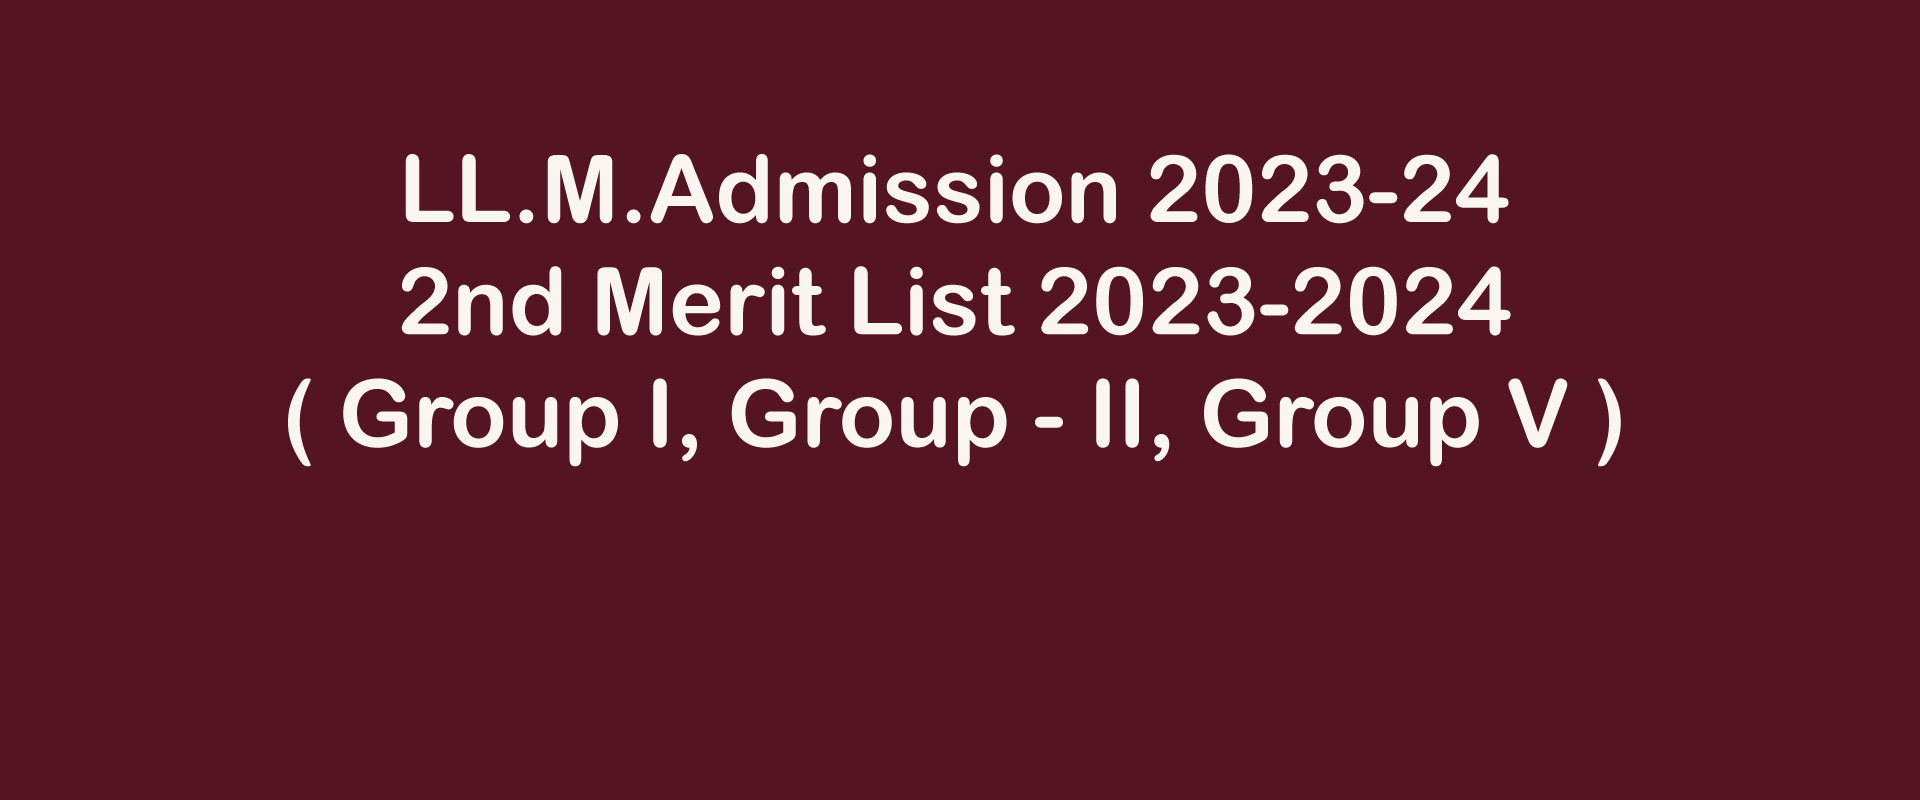 LL.M.Admission 2nd Merit List 2023-2024 ( Group I, Group - II, Group V )